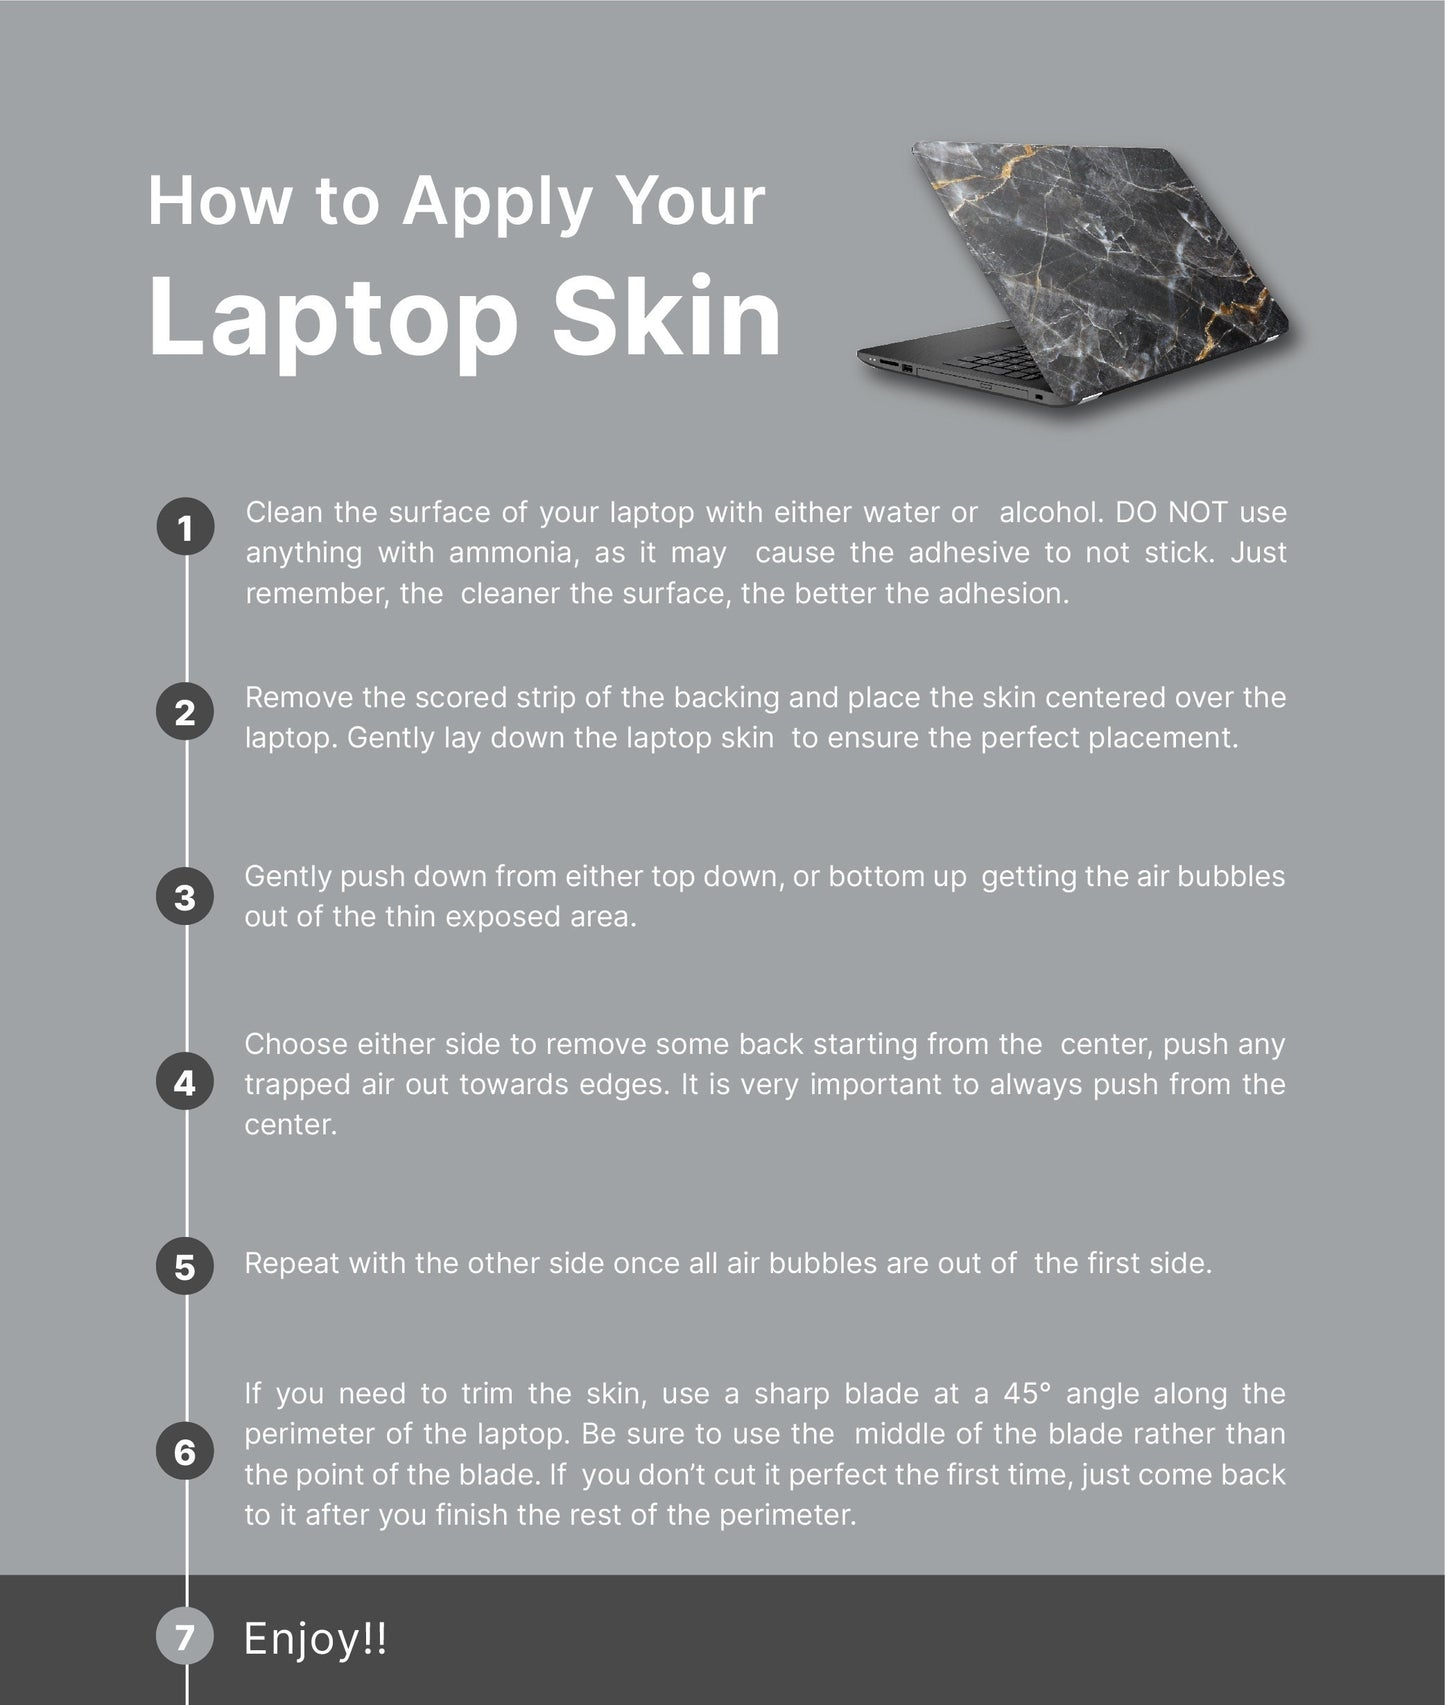 Mountains Scenic Laptop Skin, Laptop Cover, Laptop Skins, Removable Laptop Skins, Laptop Decal, Customized Laptop Skin, Laptop Stickers 359